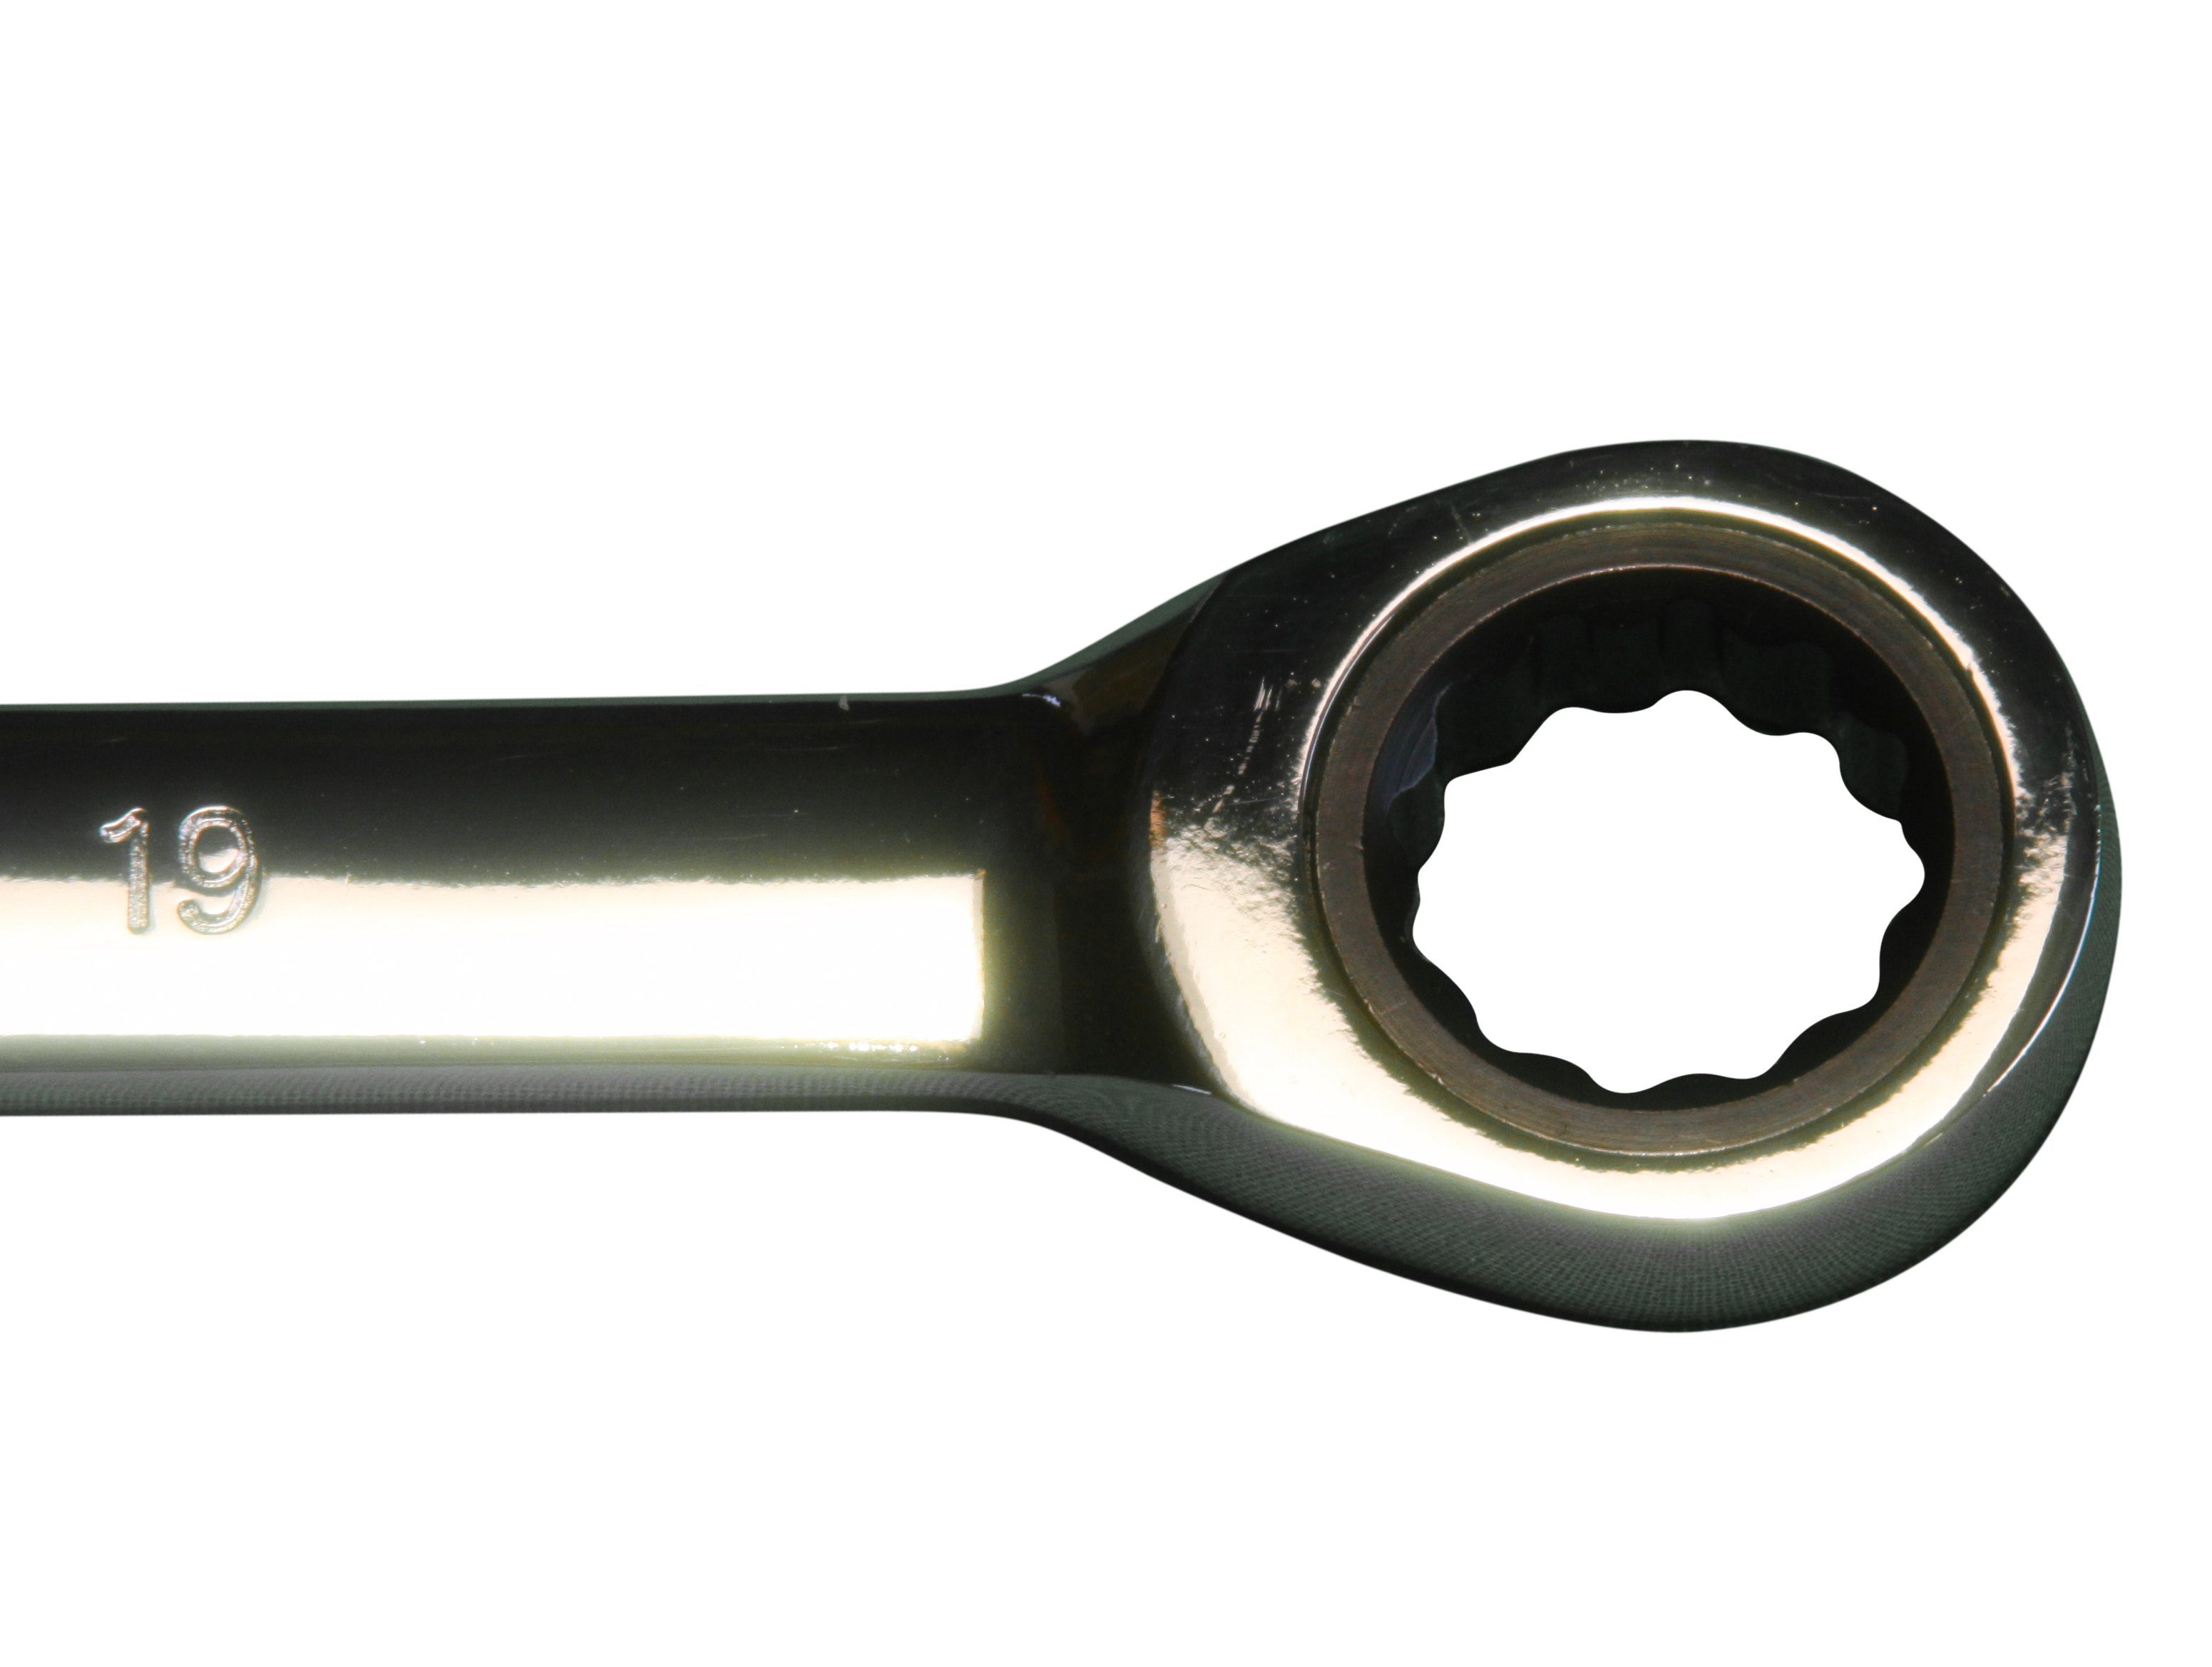 PeTools Ratschenringschlüssel 22-tlg. Ratschen-Schlüssel Maul-Schlüssel-Satz 72 Zähne 6-32 mm Ringratschen Chrom-Vanadium-Stahl 5° St), (22